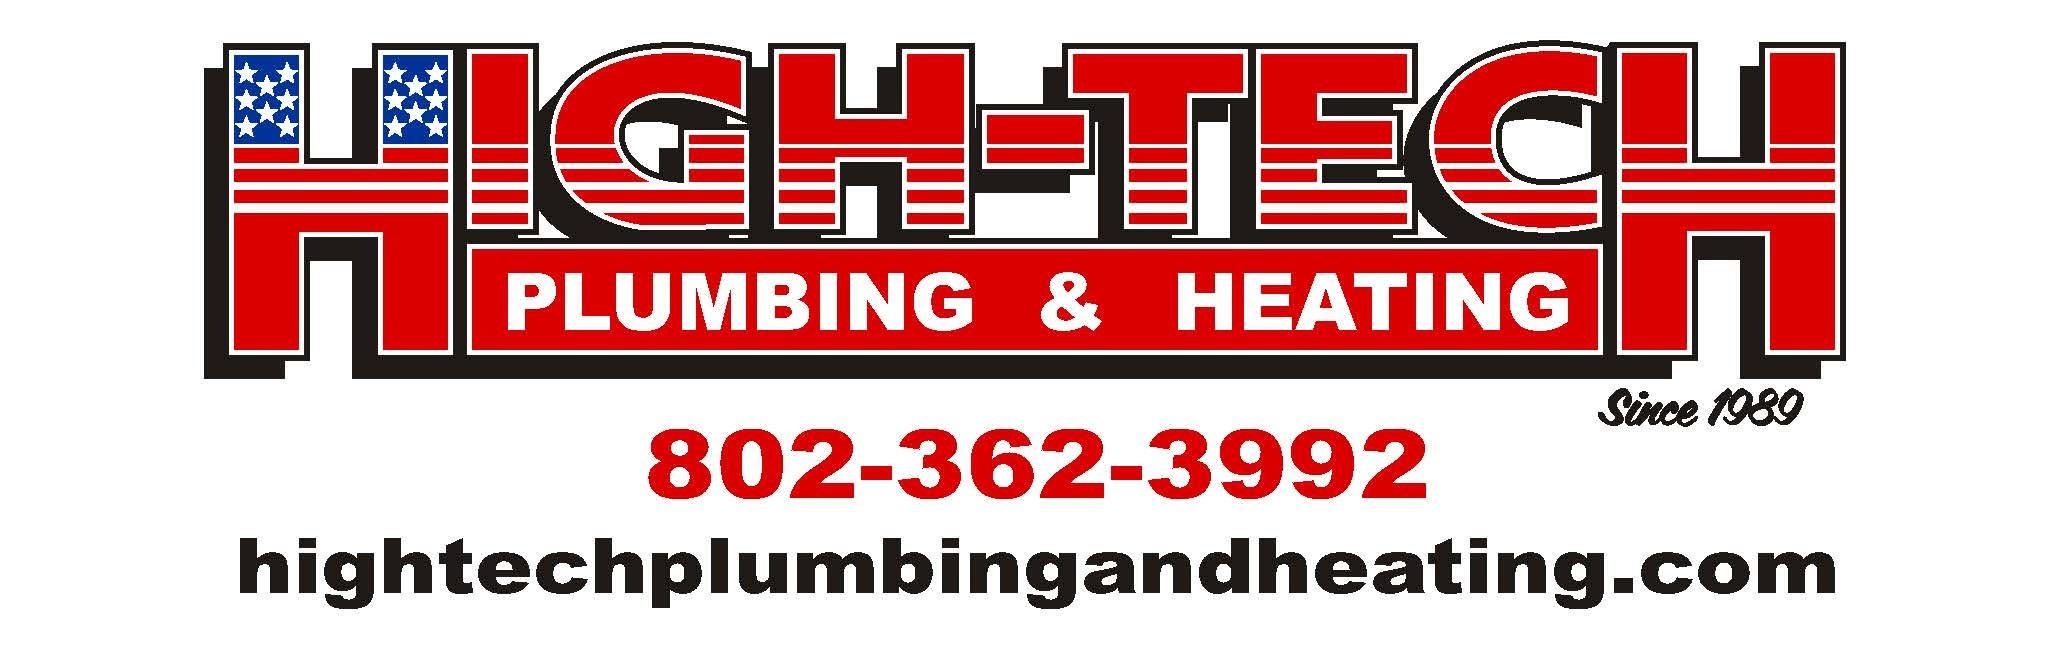 High-Tech Plumbing & Heating